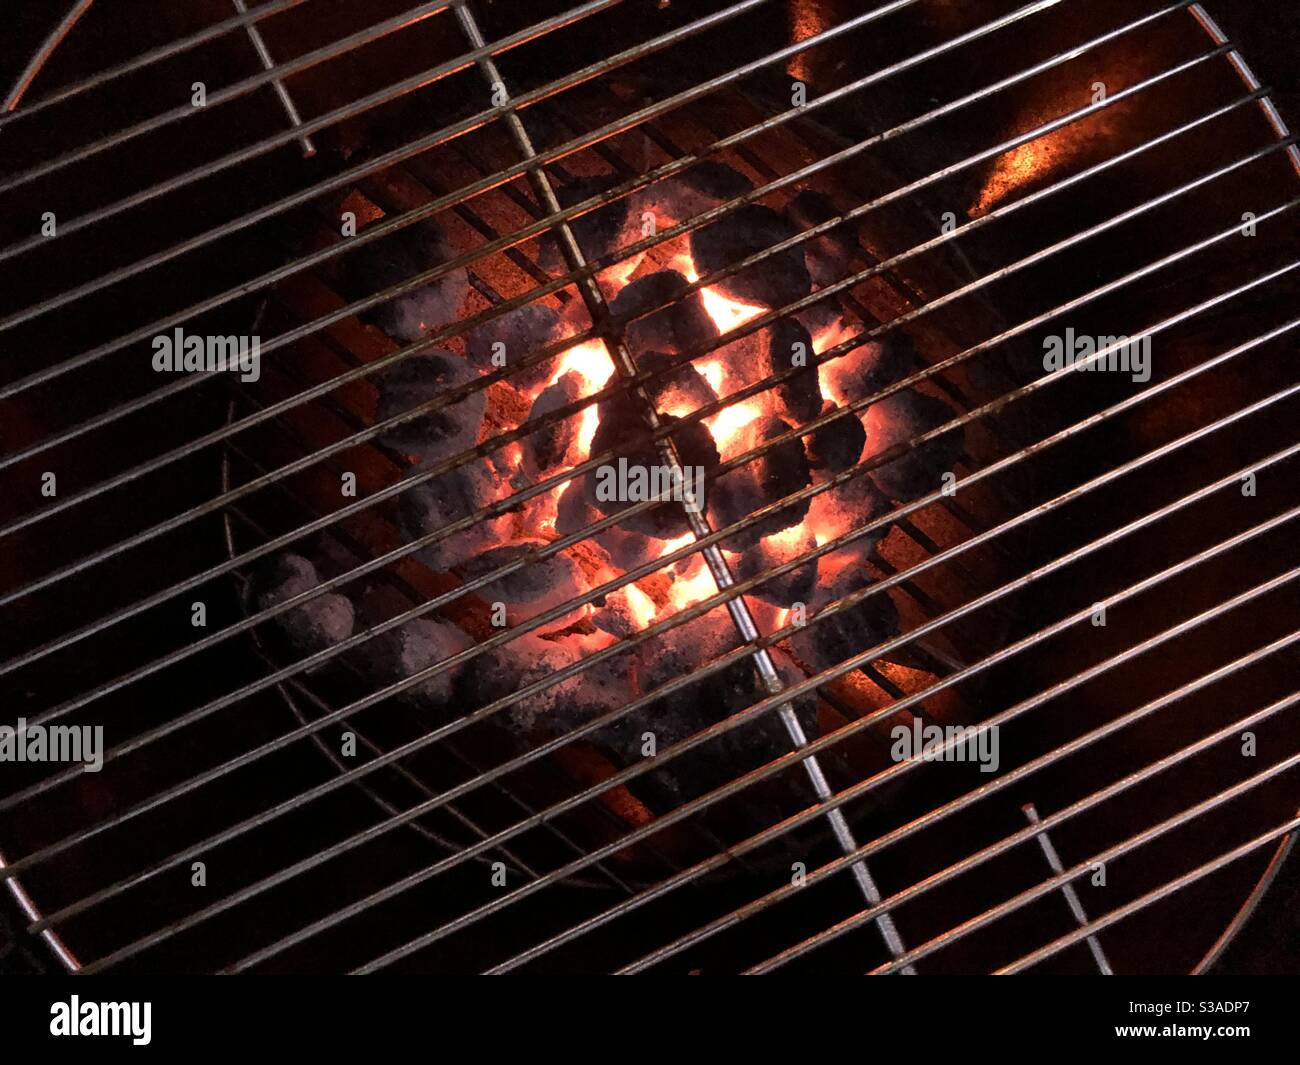 Panoramica dei carbonai caldi su una griglia da cucina. Foto Stock